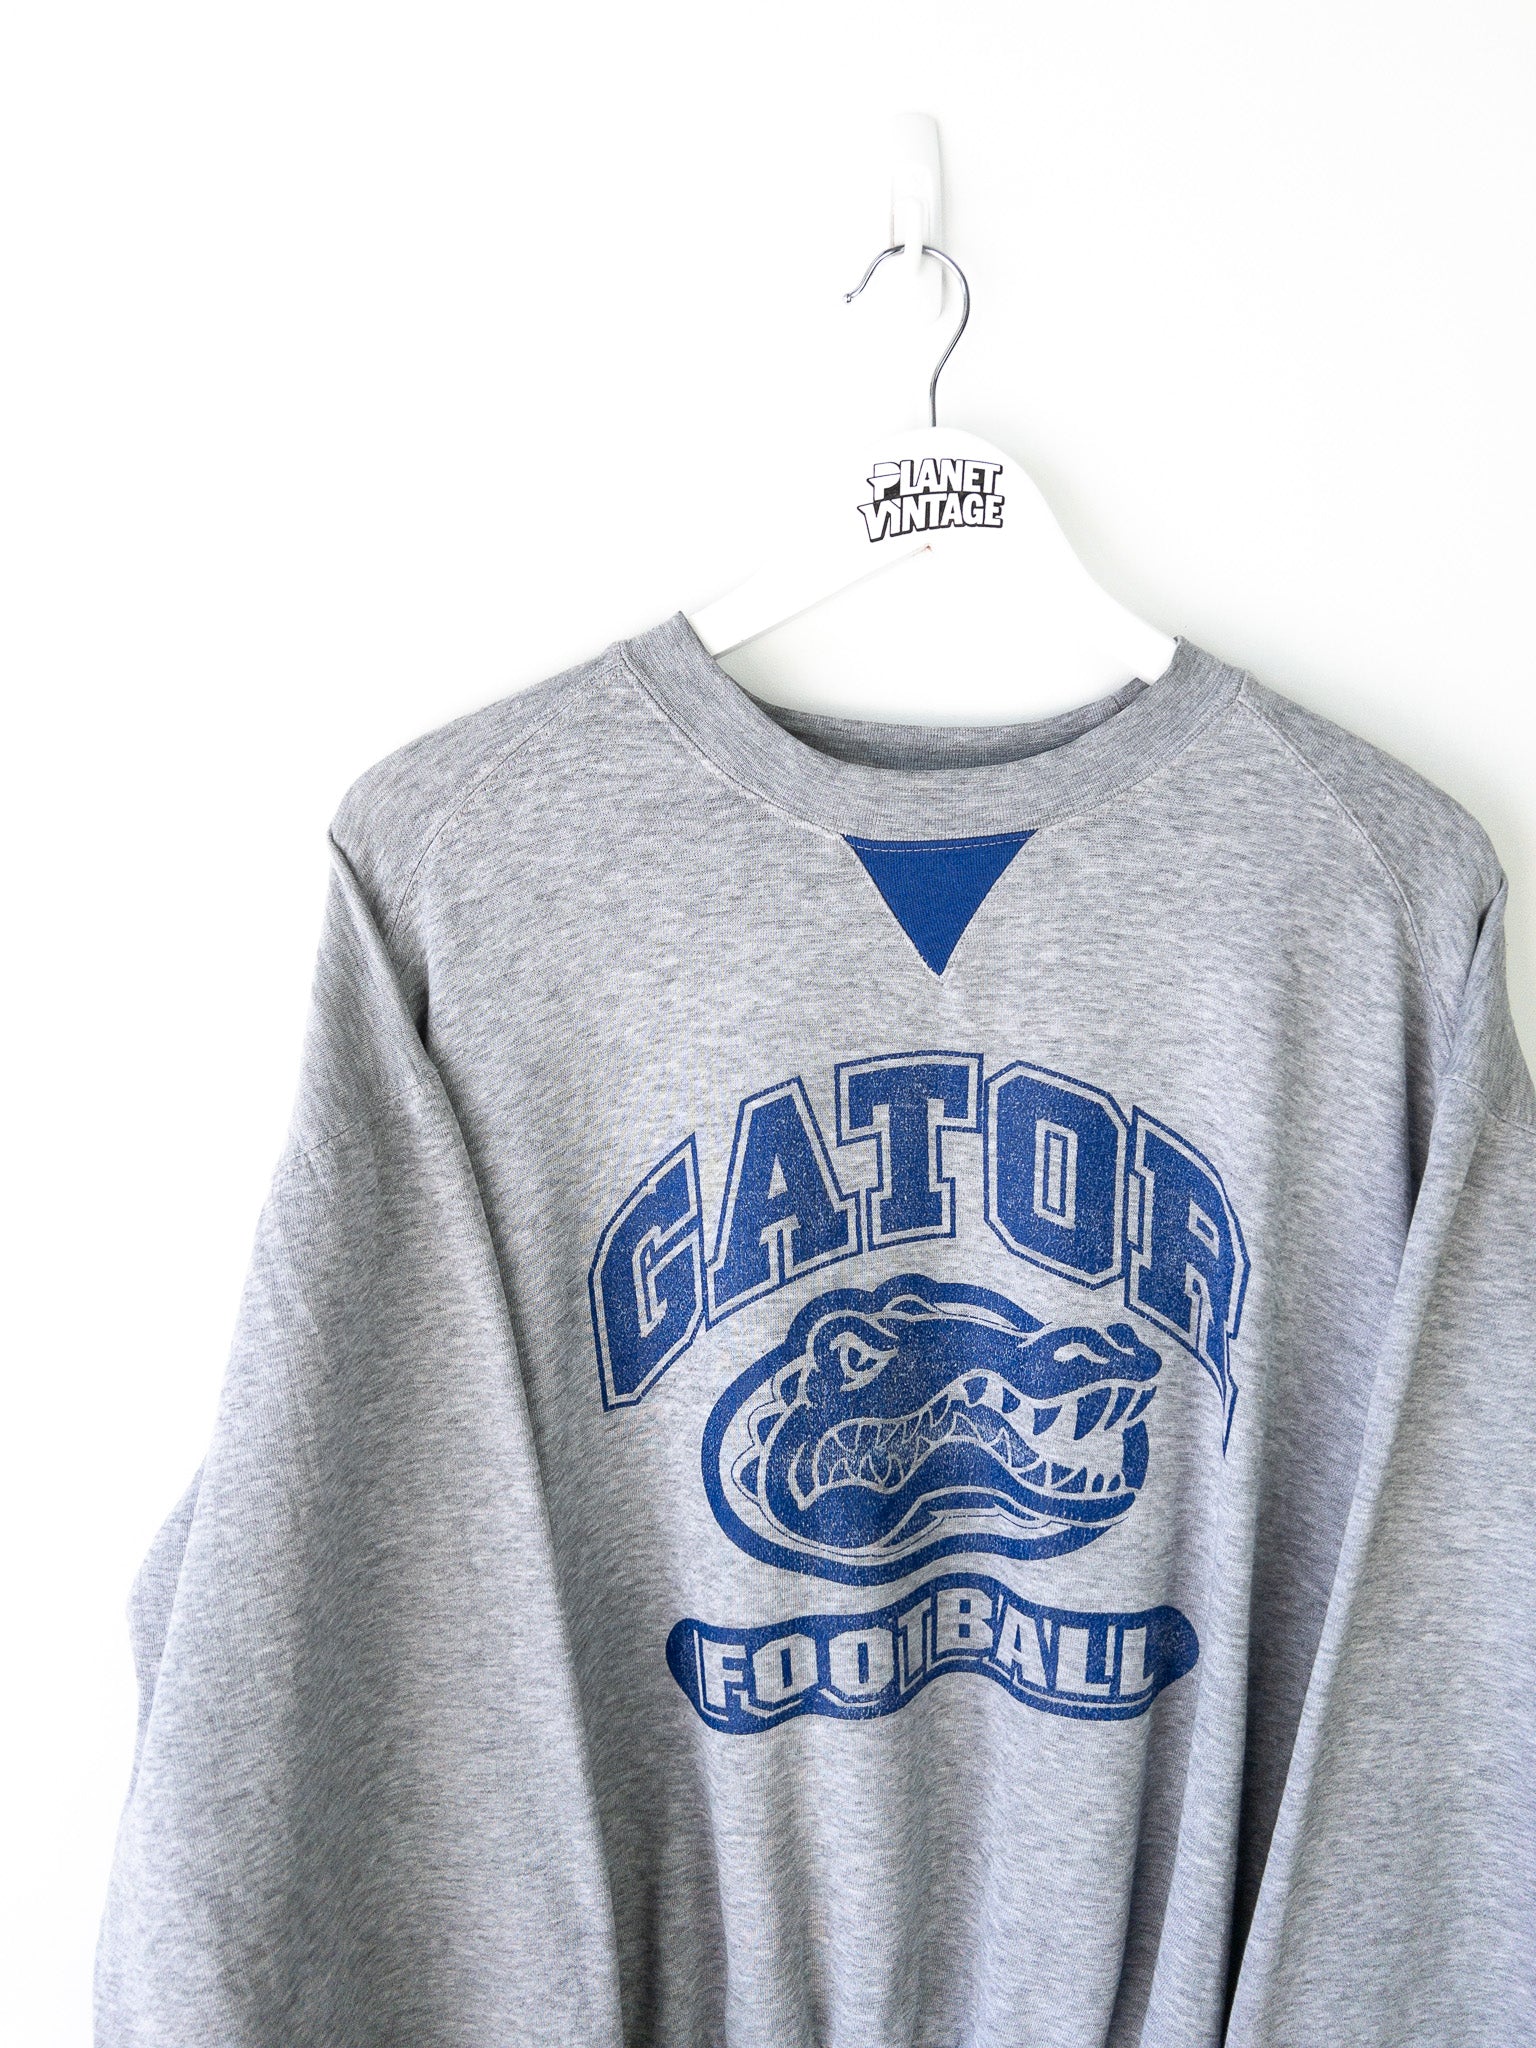 Vintage Florida Gators Sweatshirt (XL)